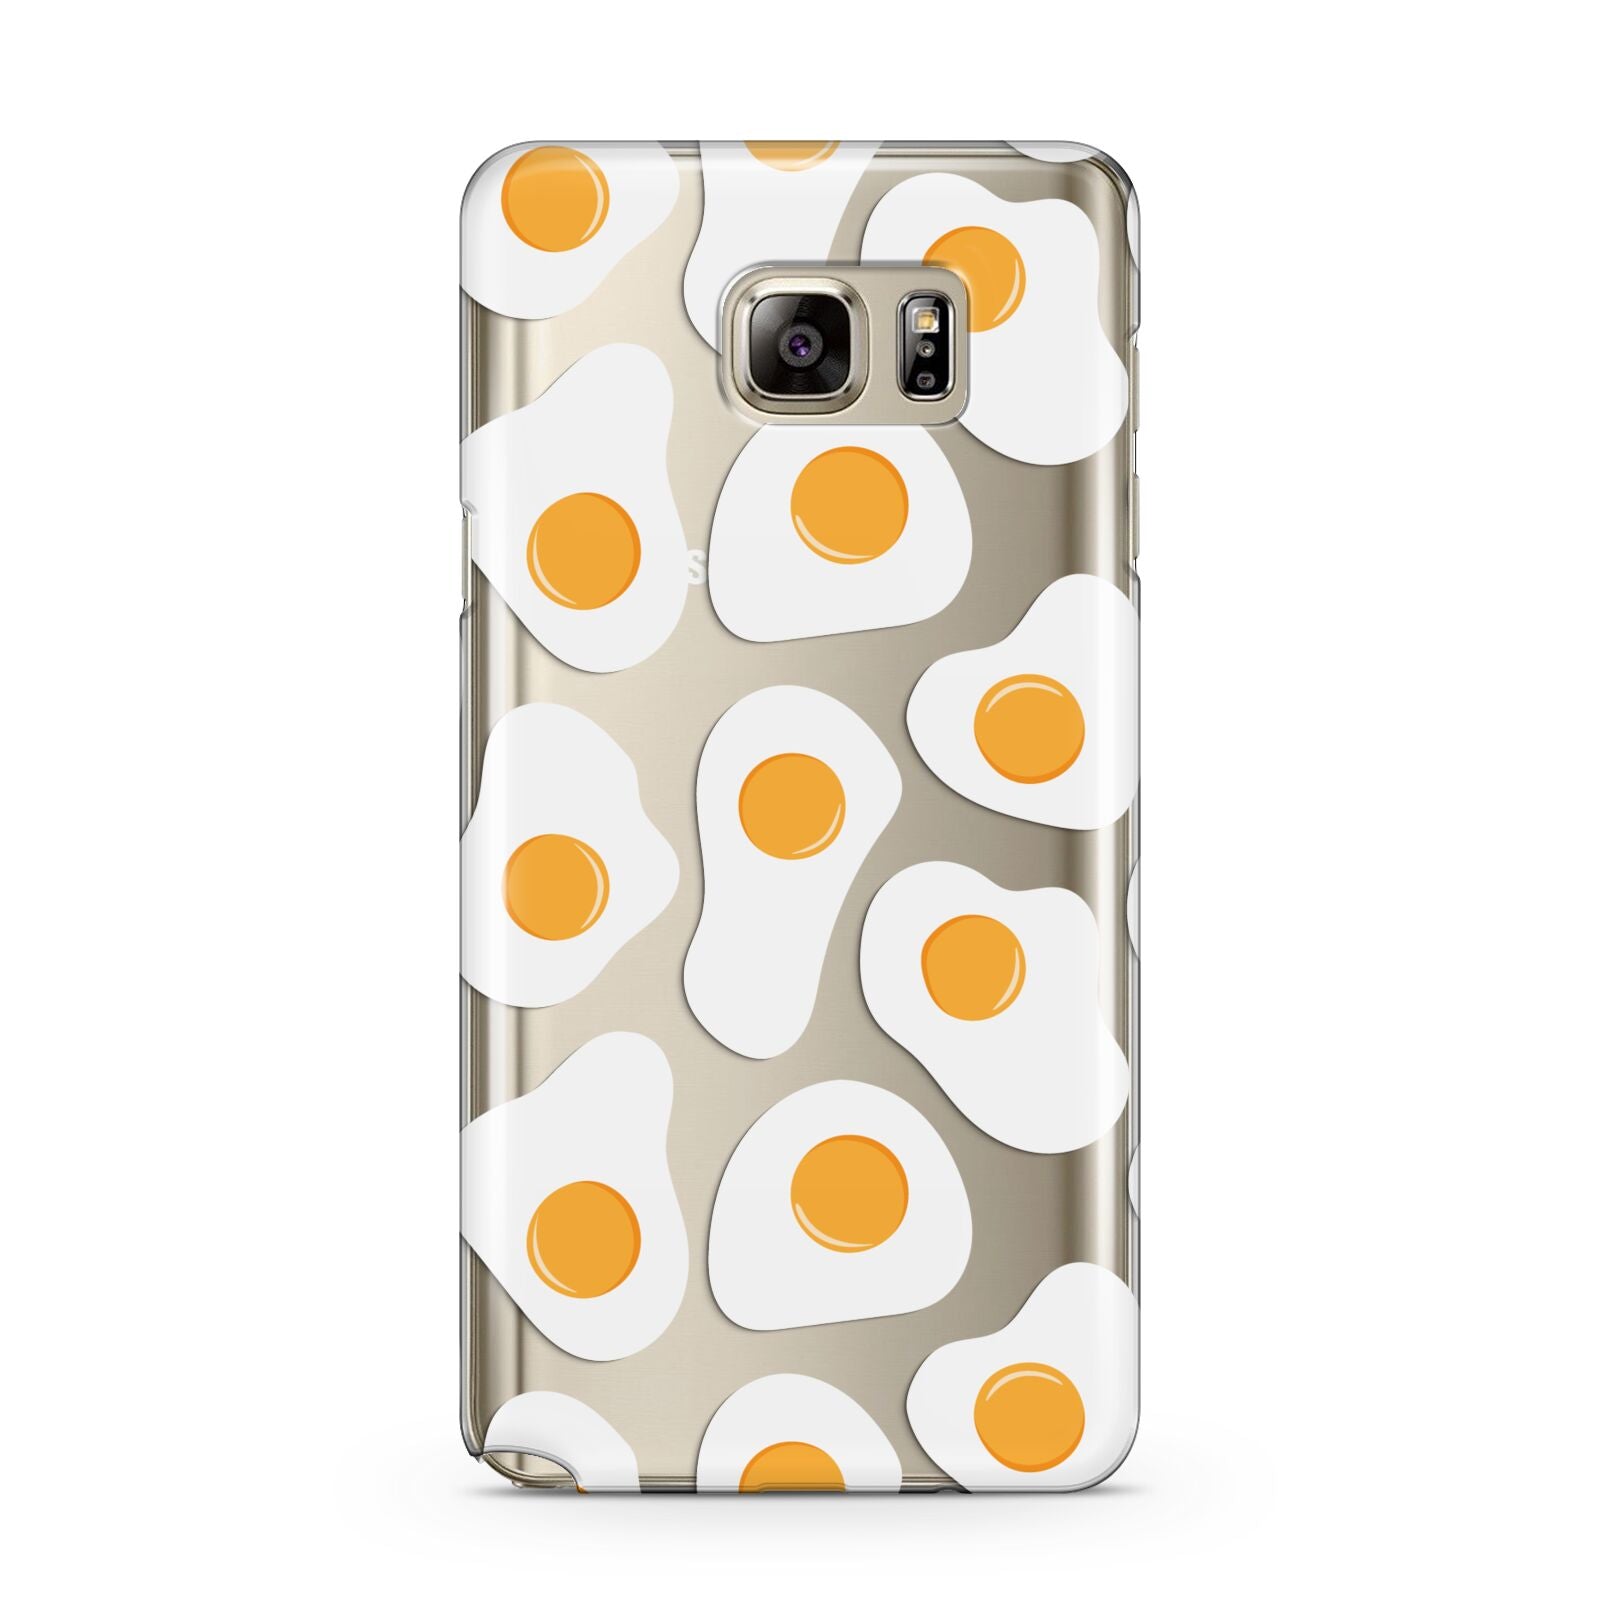 Fried Egg Samsung Galaxy Note 5 Case